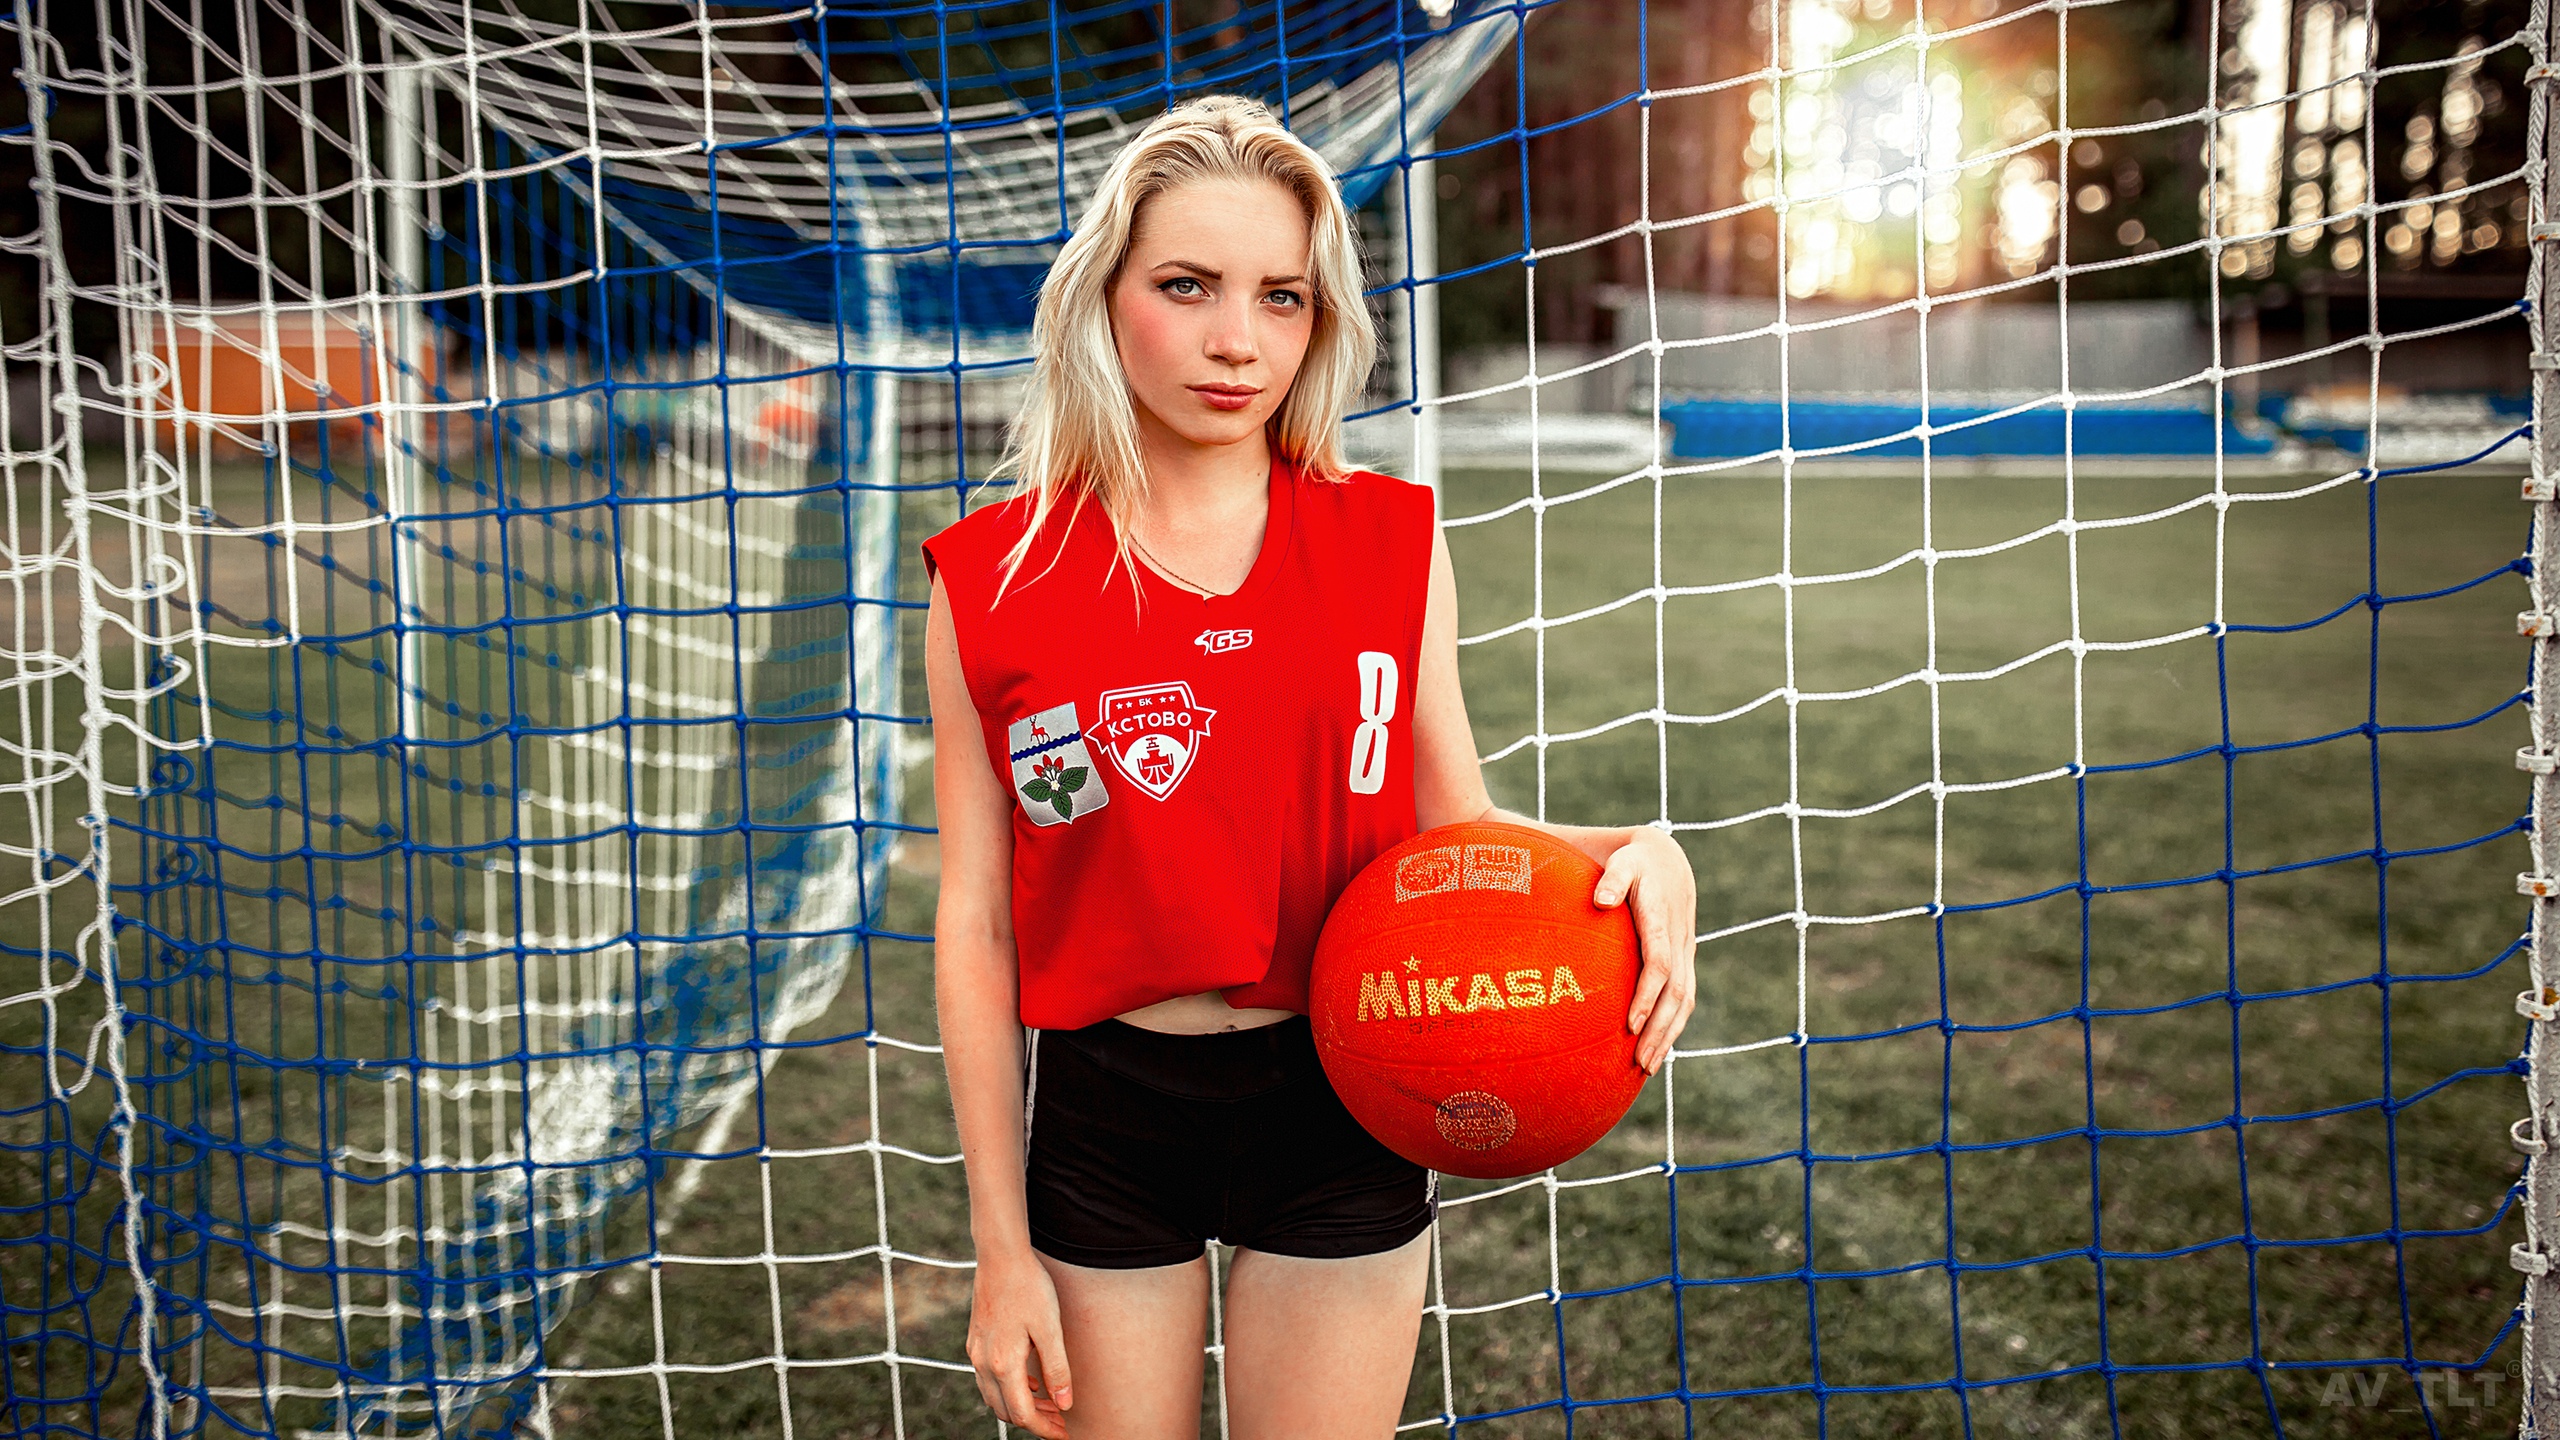 Women Model Portrait Blonde Outdoors Soccer Pitches Goal Sports Jerseys Grass Depth Of Field Looking 2560x1440